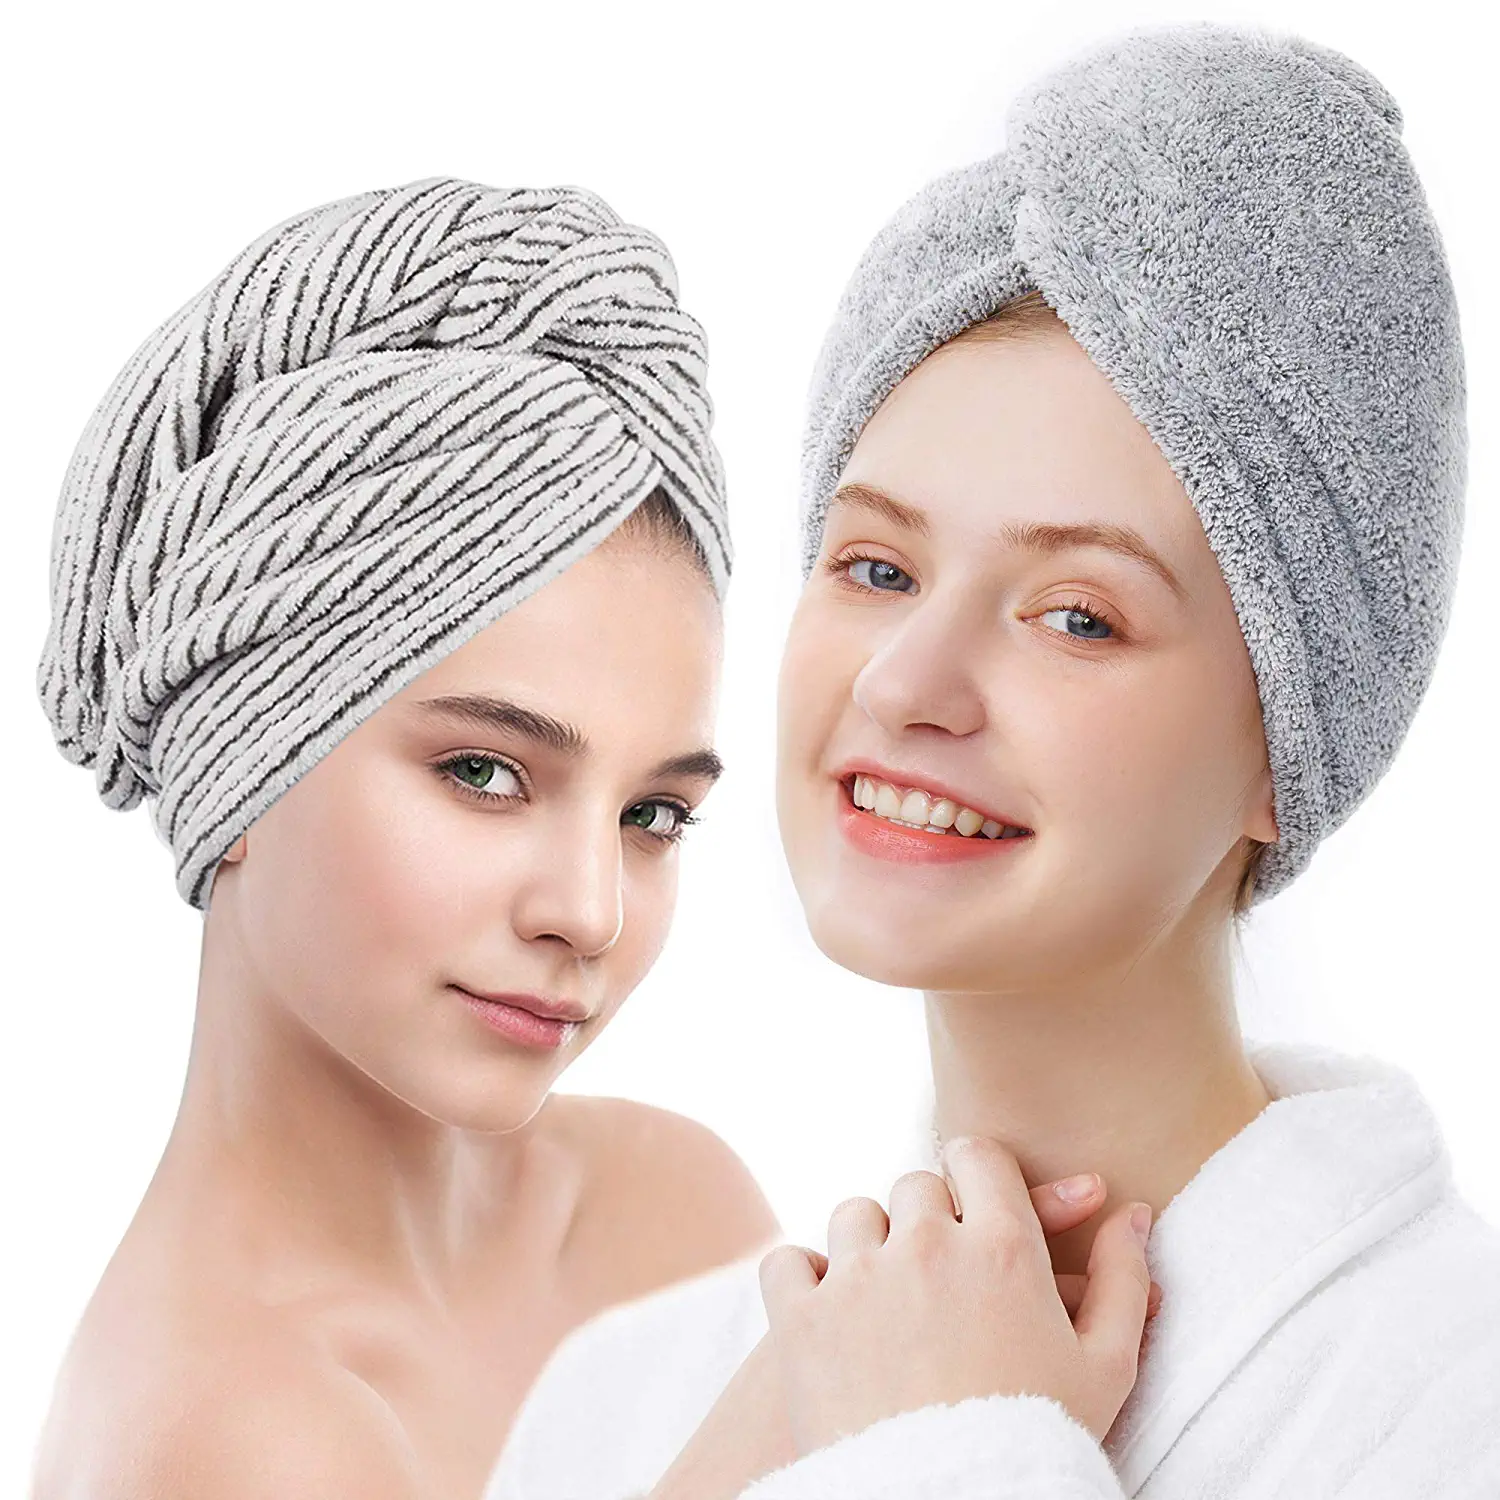 ELLEWIN Bamboo Fiber Towel Turbans, 2-Pack